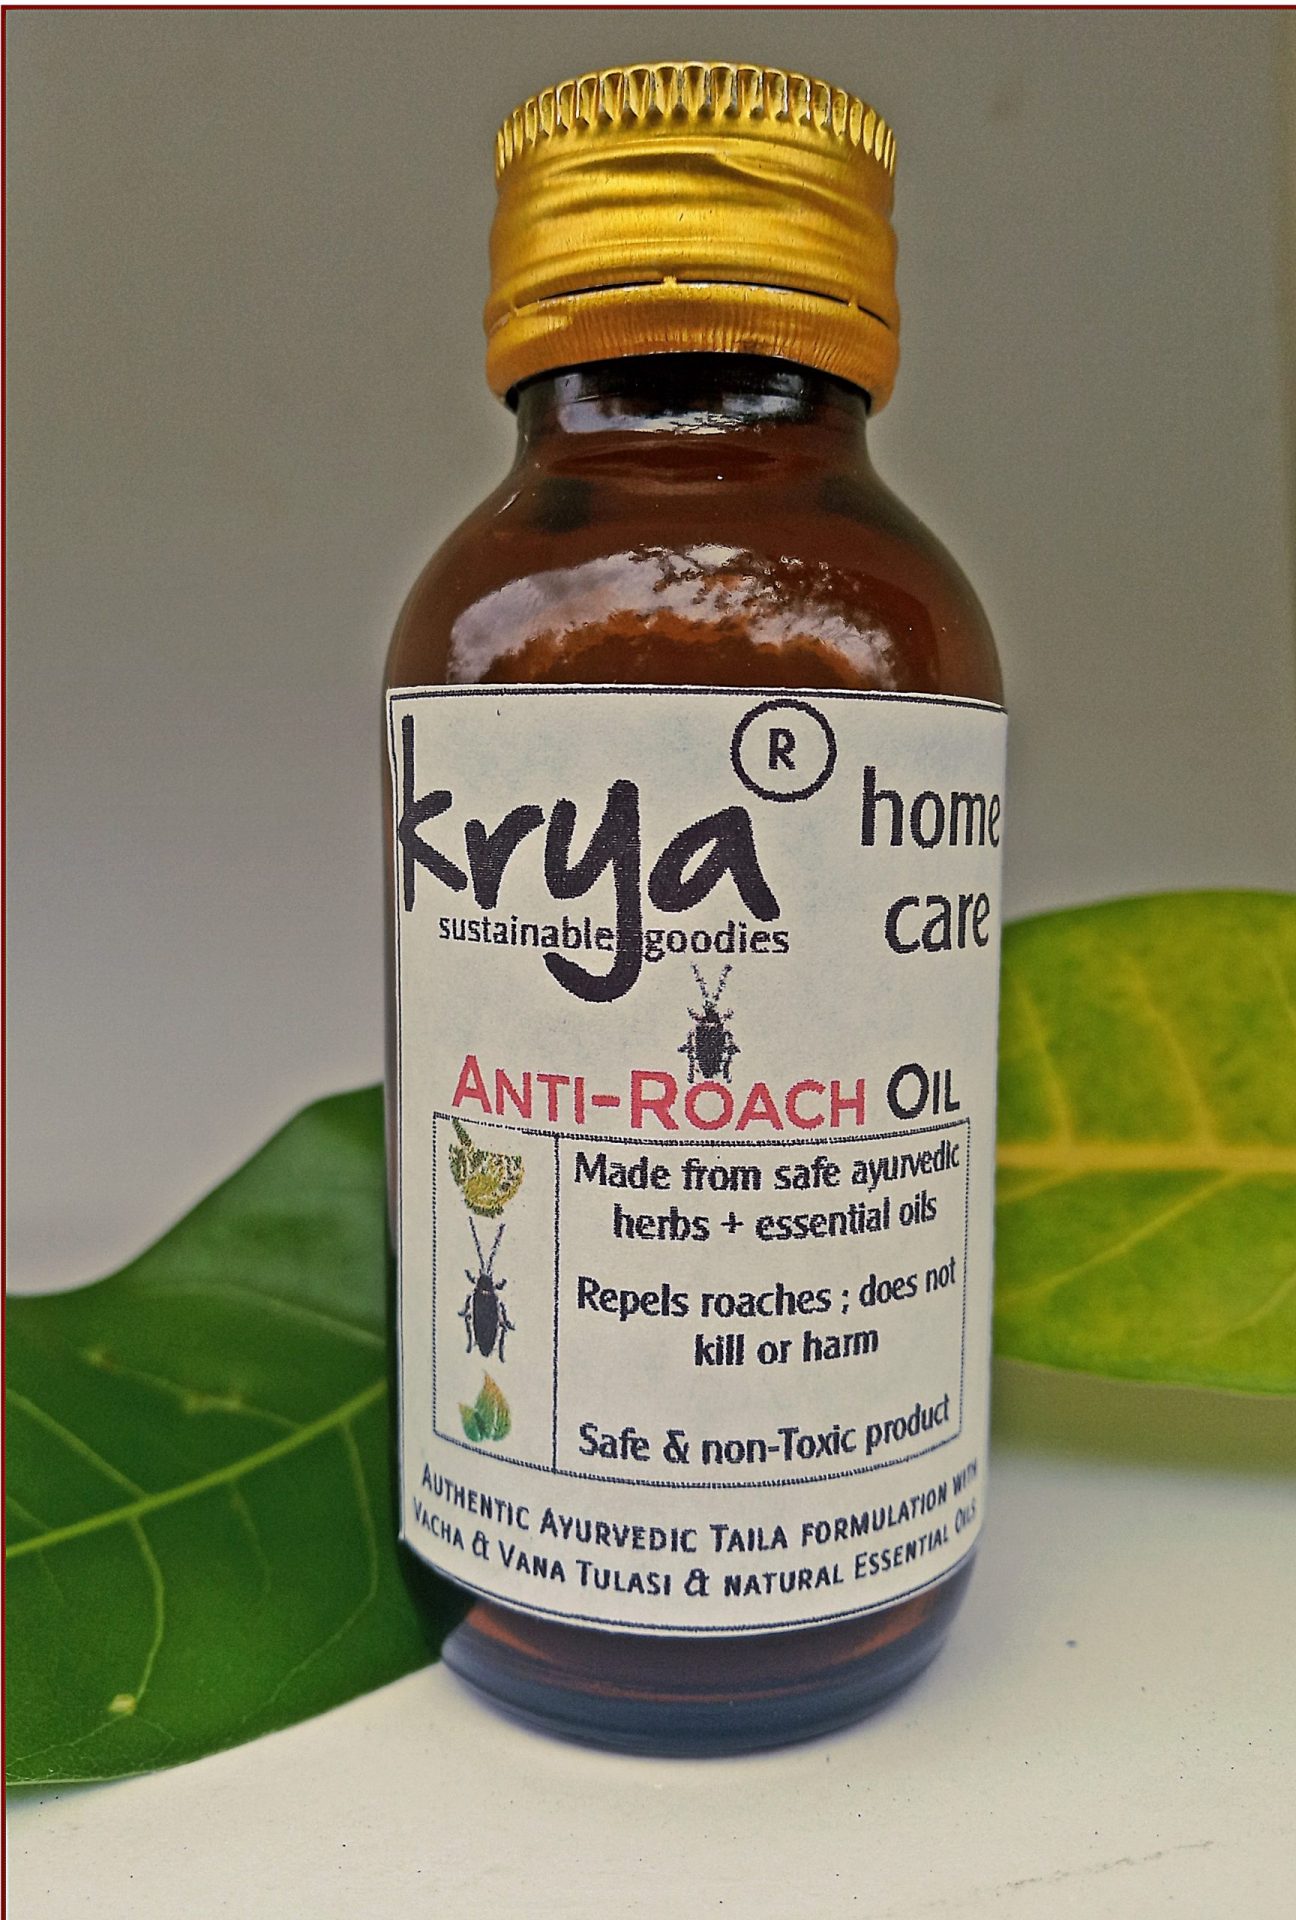 This is the Krya Cockroach Repellant Oil